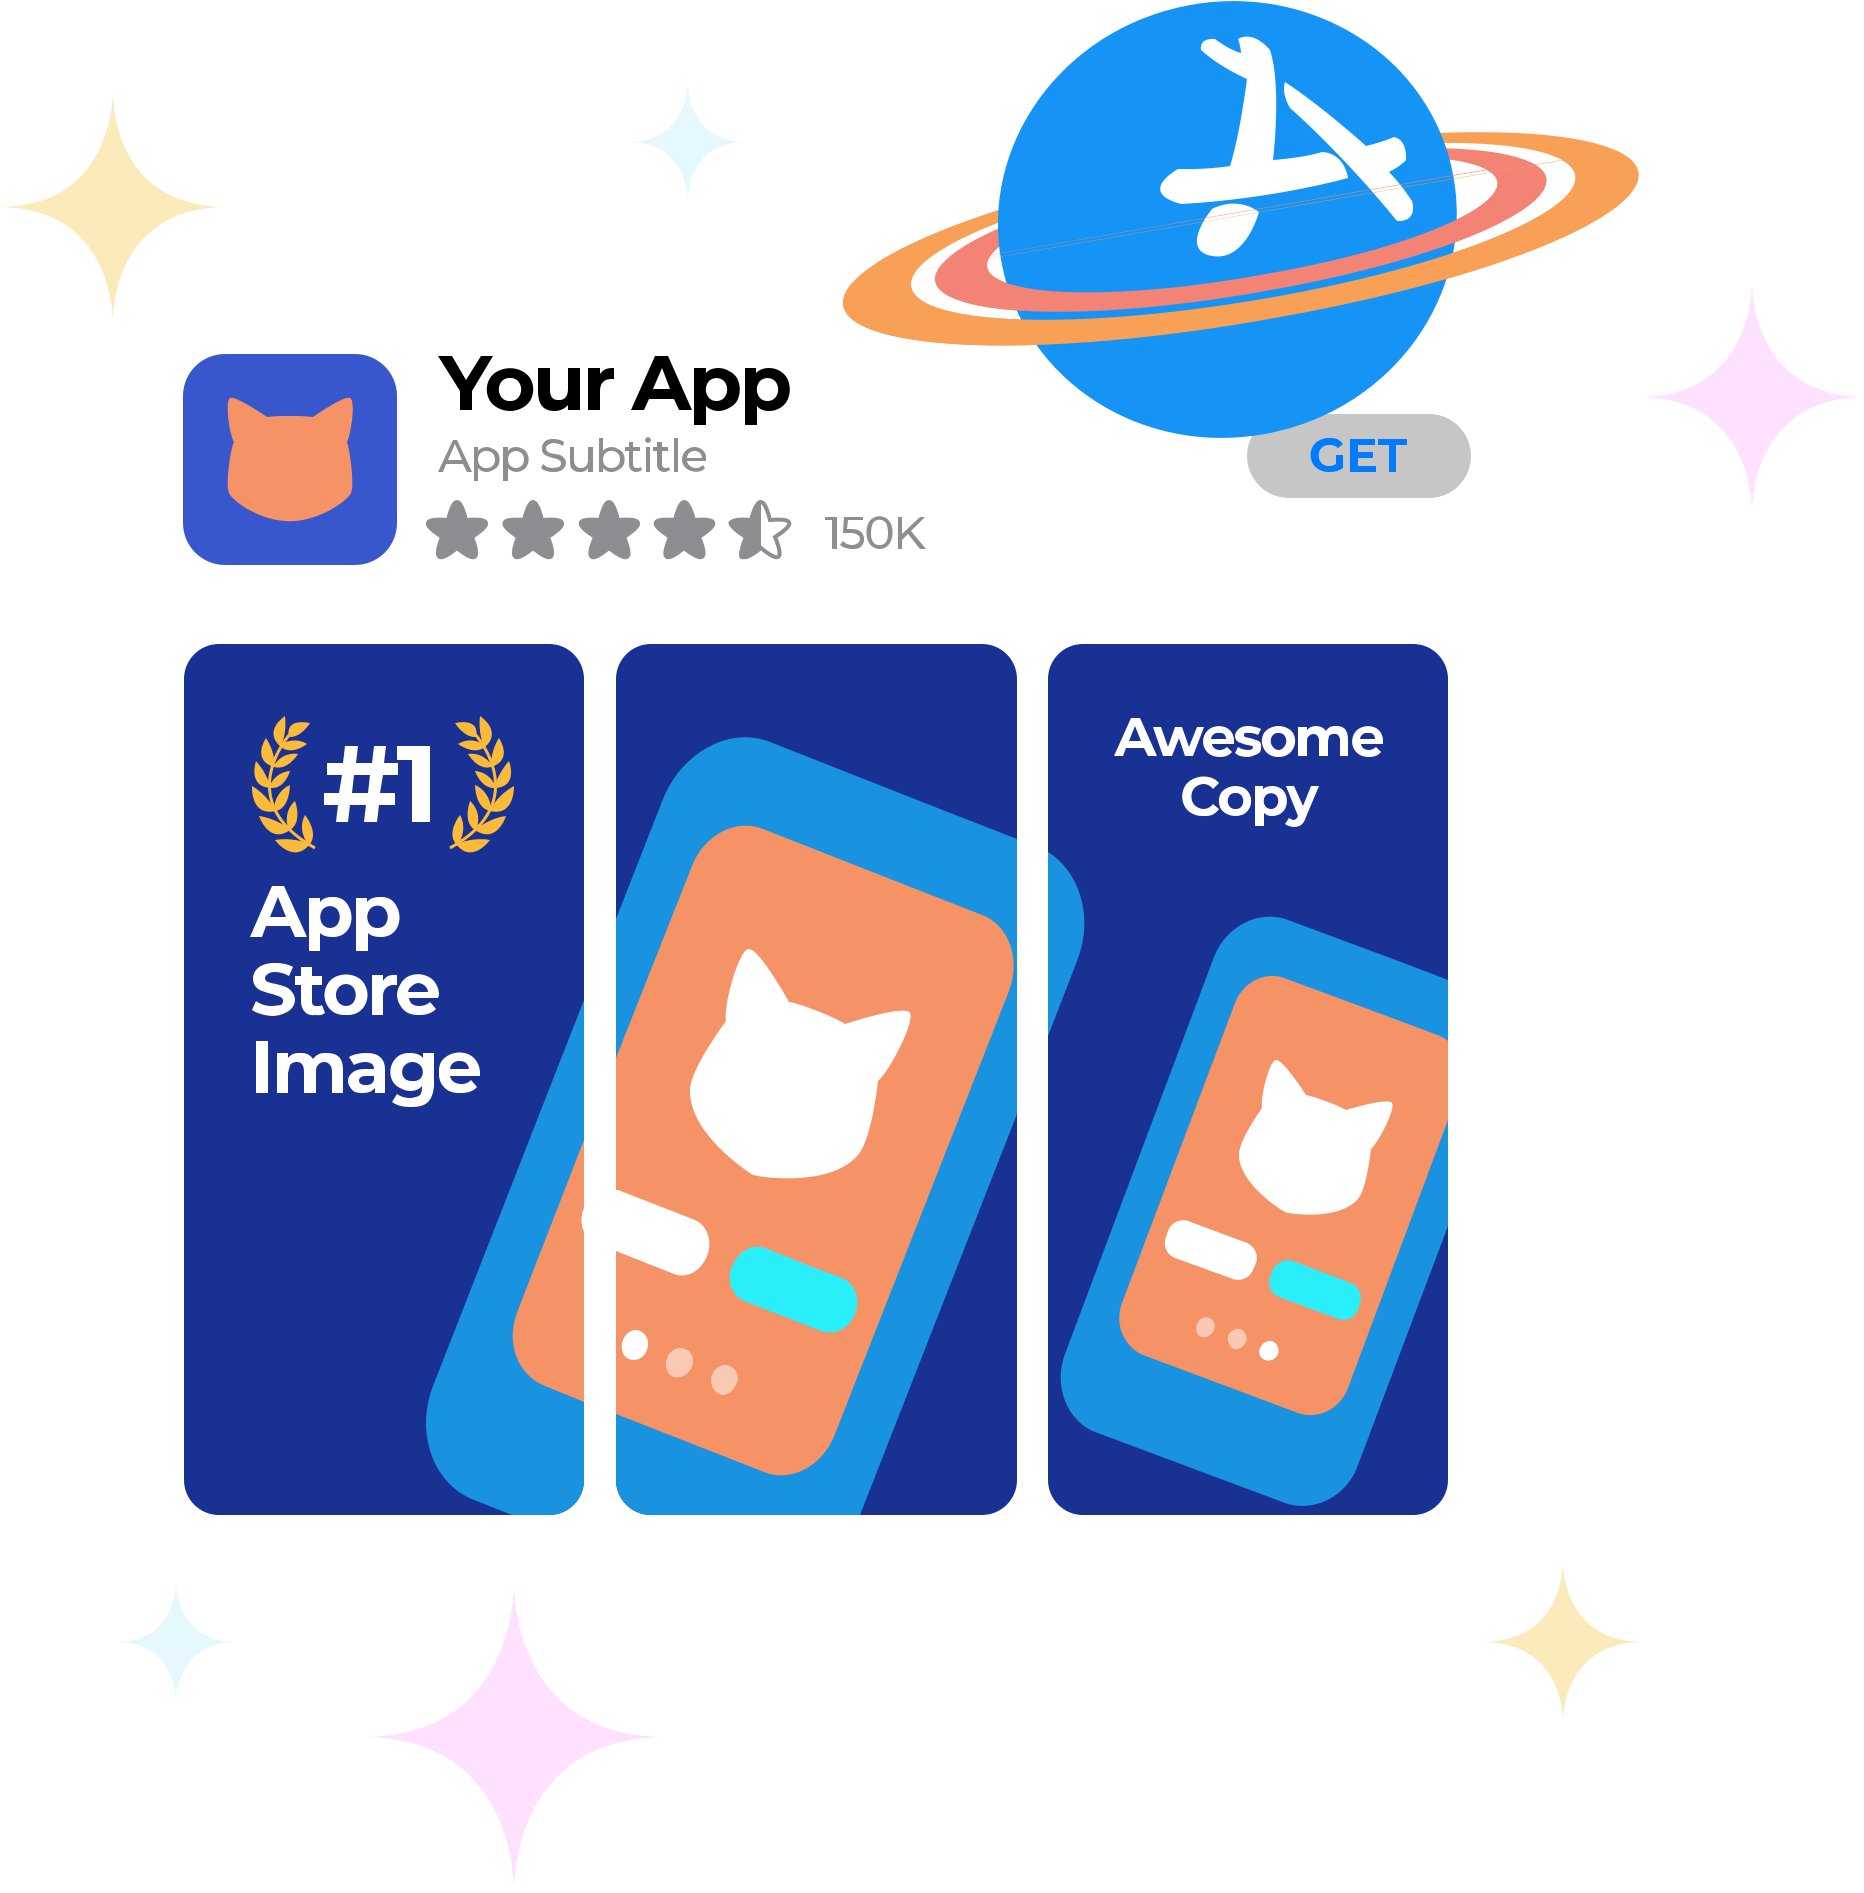 #1 App Store Image